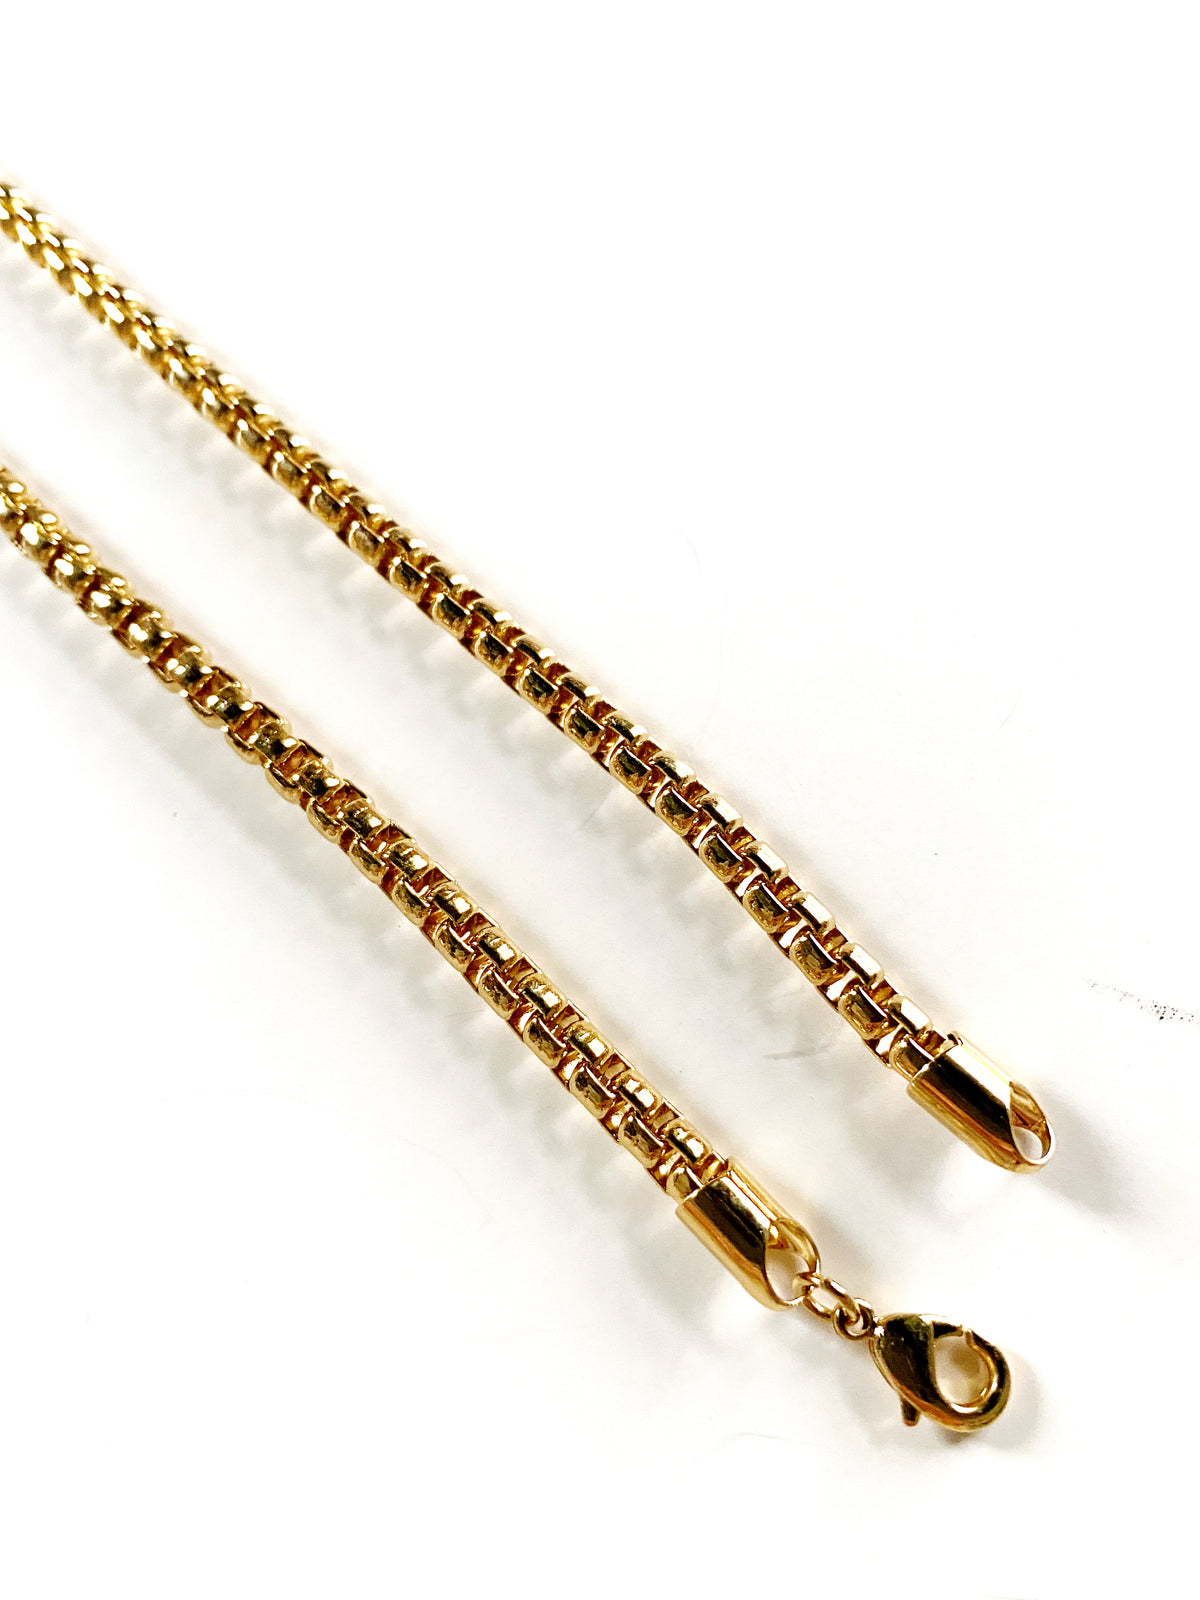 Walker Chain Bracelet: 7 inches